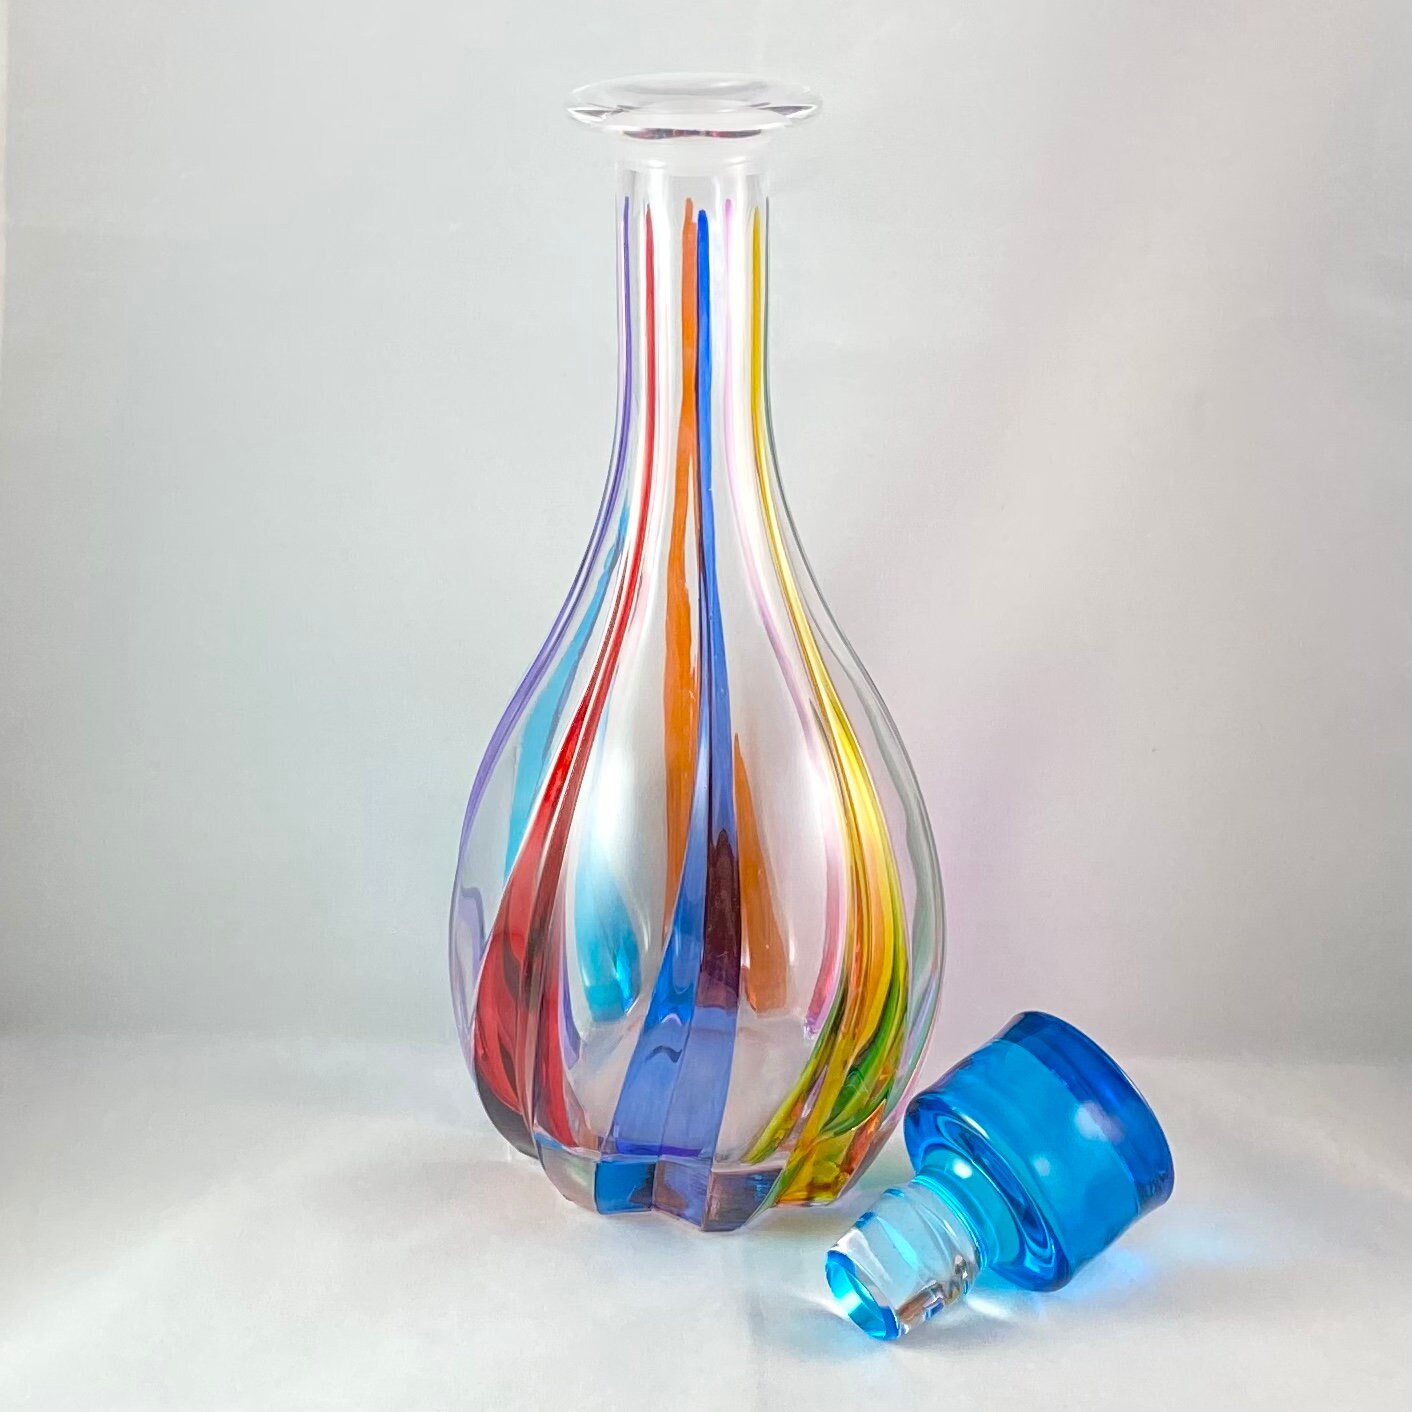 Venetian Glass Decanter - Handmade in Italy, Colorful Murano Glass